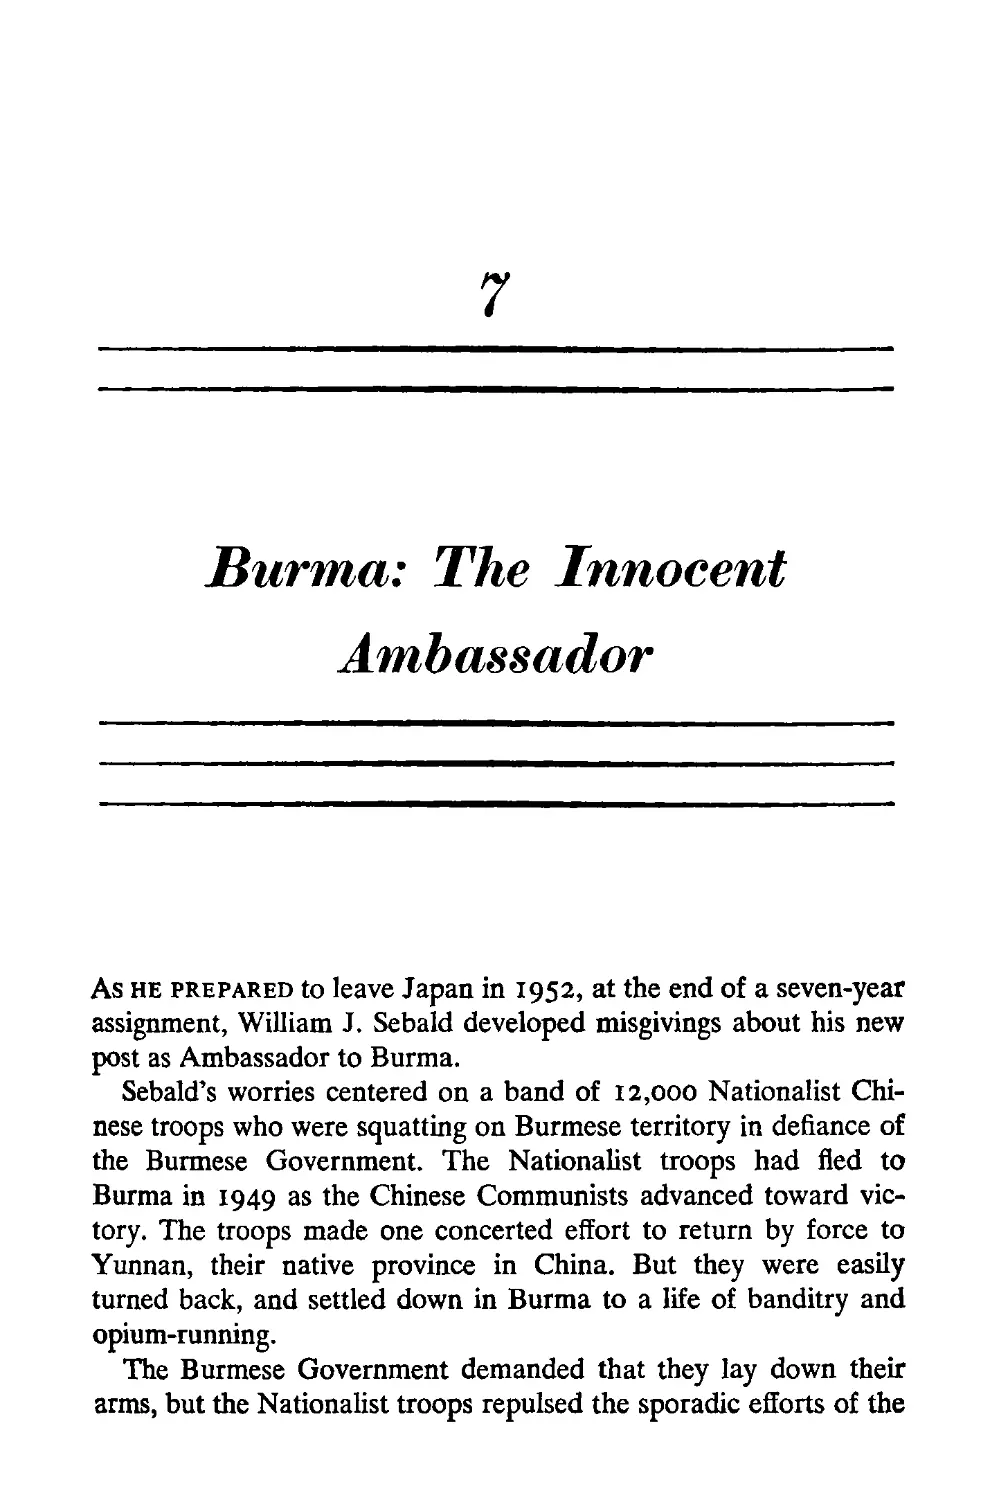 7. Burma: The Innocent Ambassador